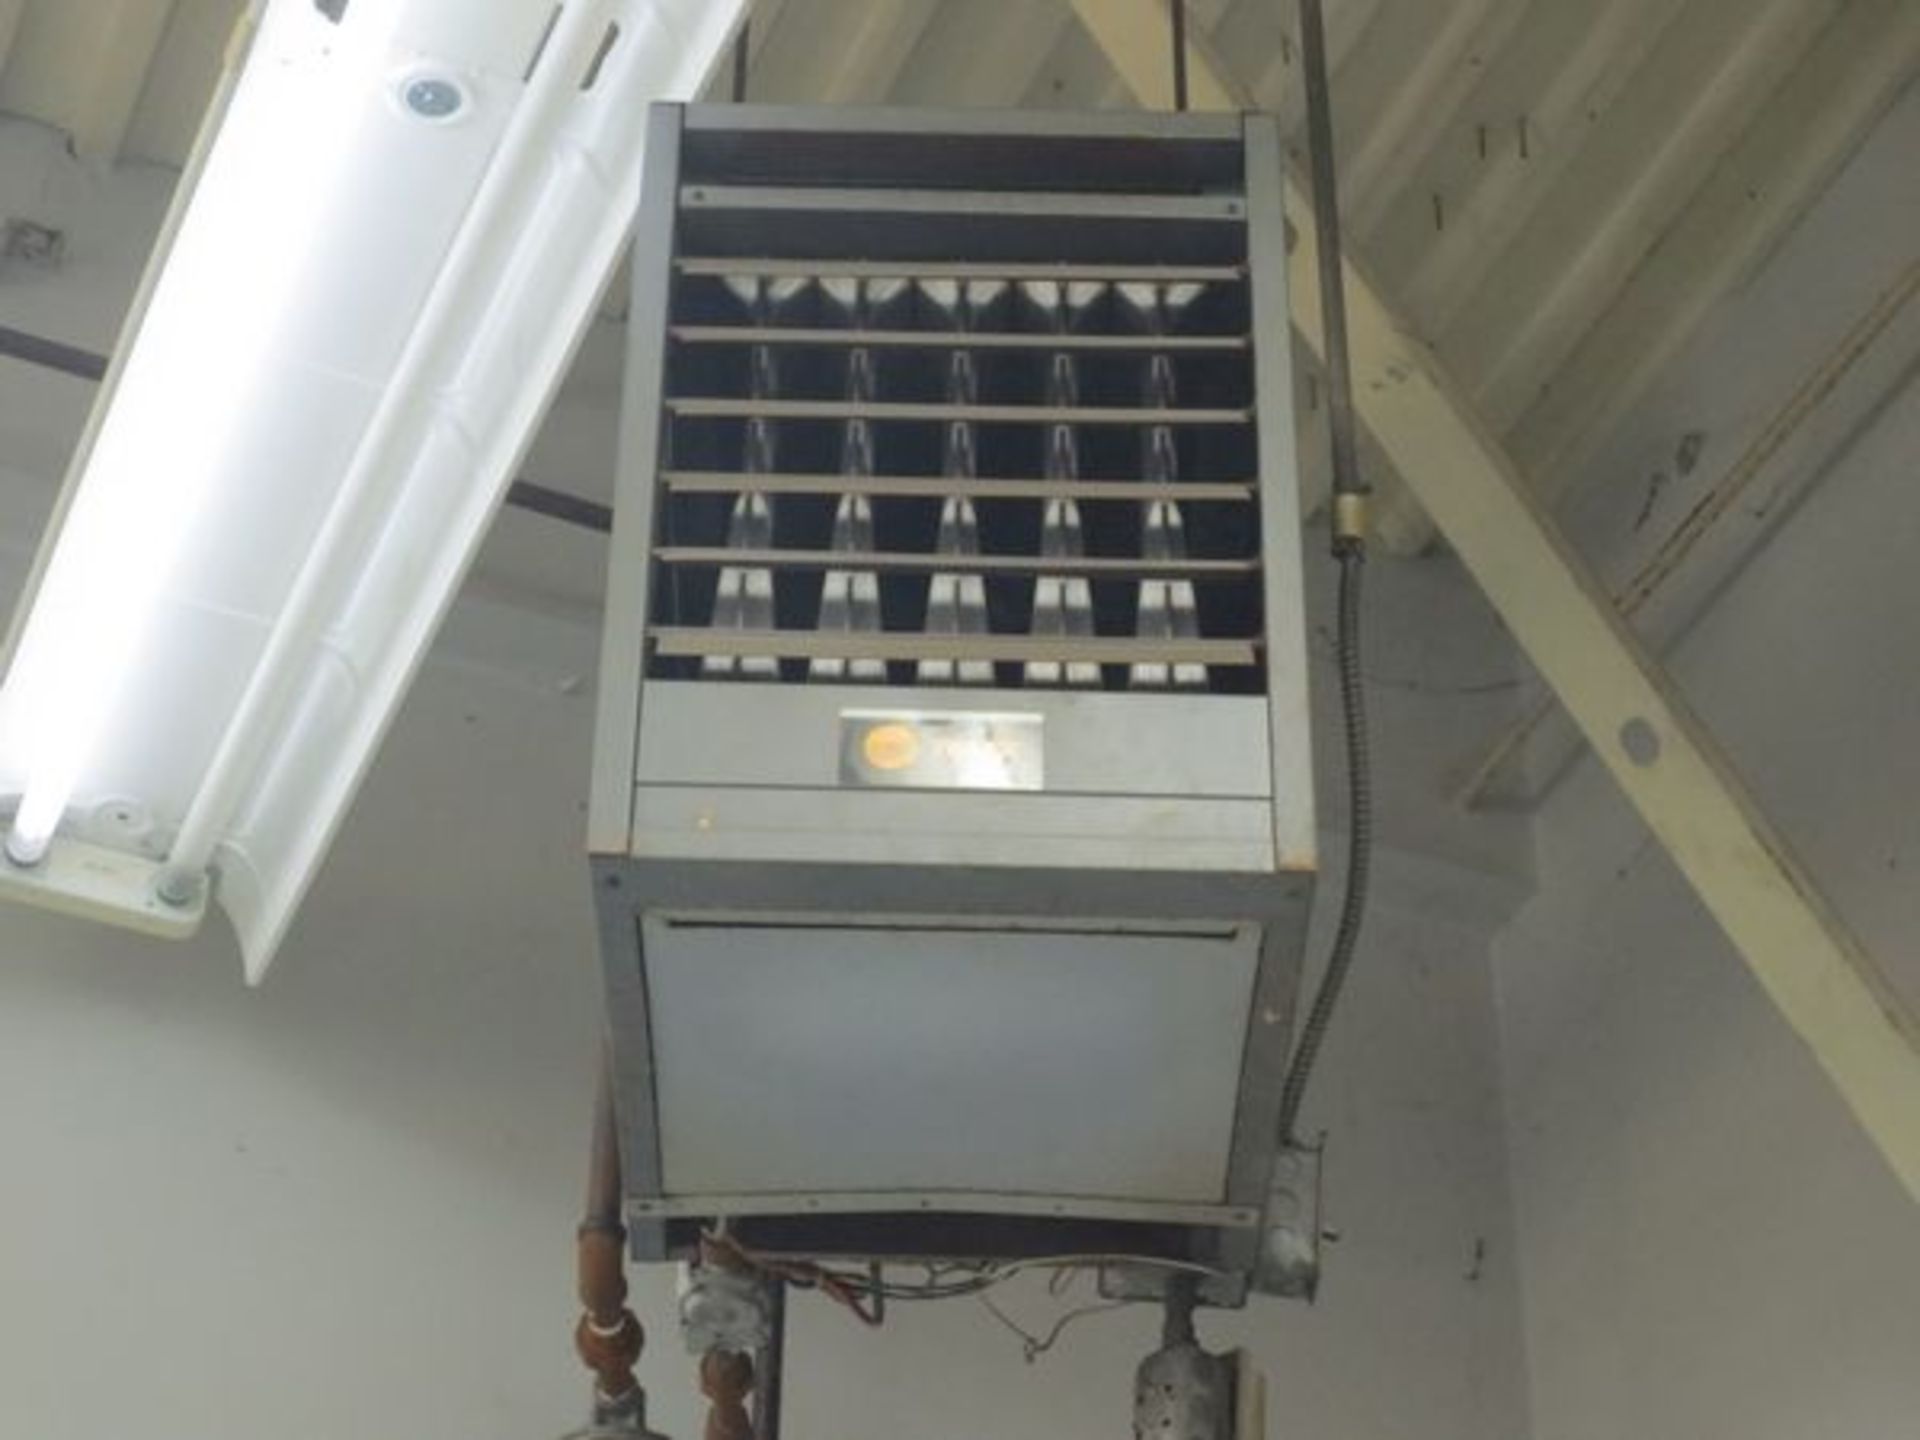 Trane gas heater - Image 2 of 2